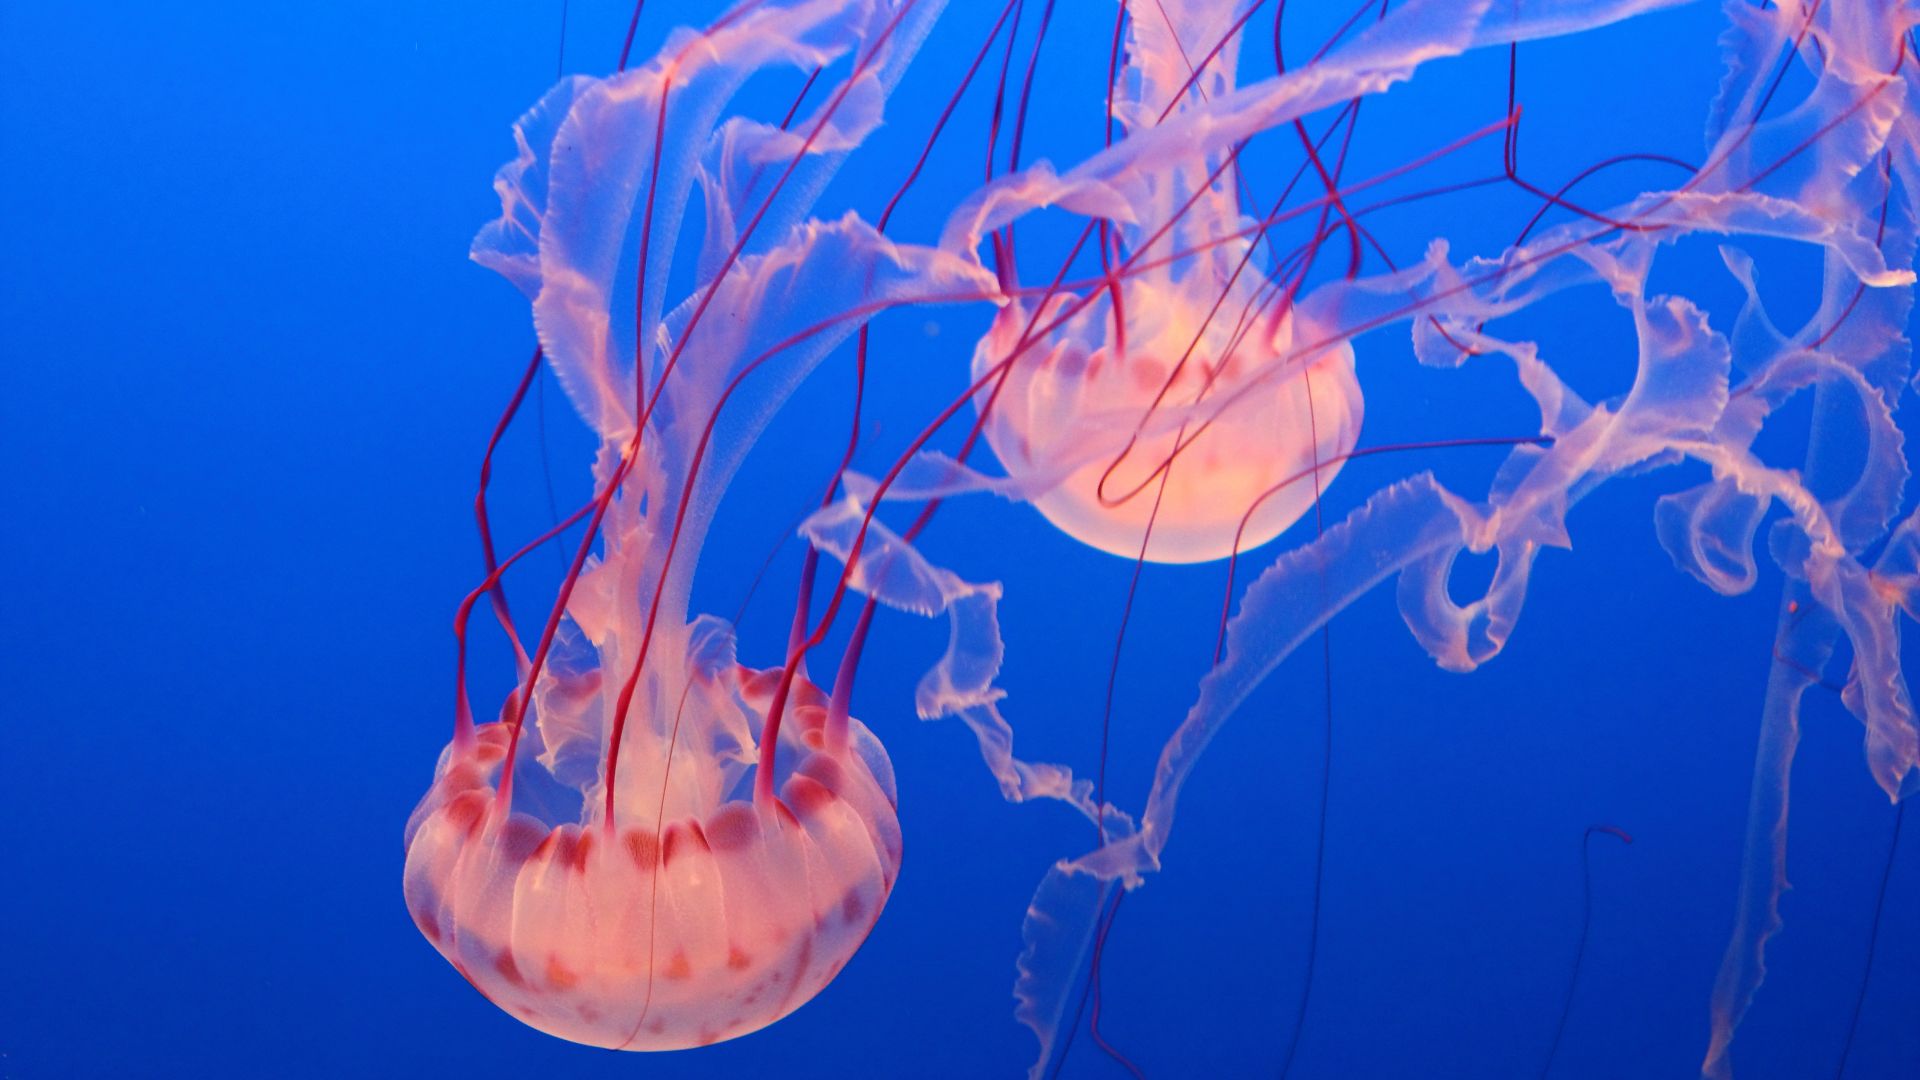 Розовая медуза, Аквариум Монтерей-Бей, дайвинг, туризм, Pink Jellyfish, Monterey Bay Aquarium, diving, tourism (horizontal)